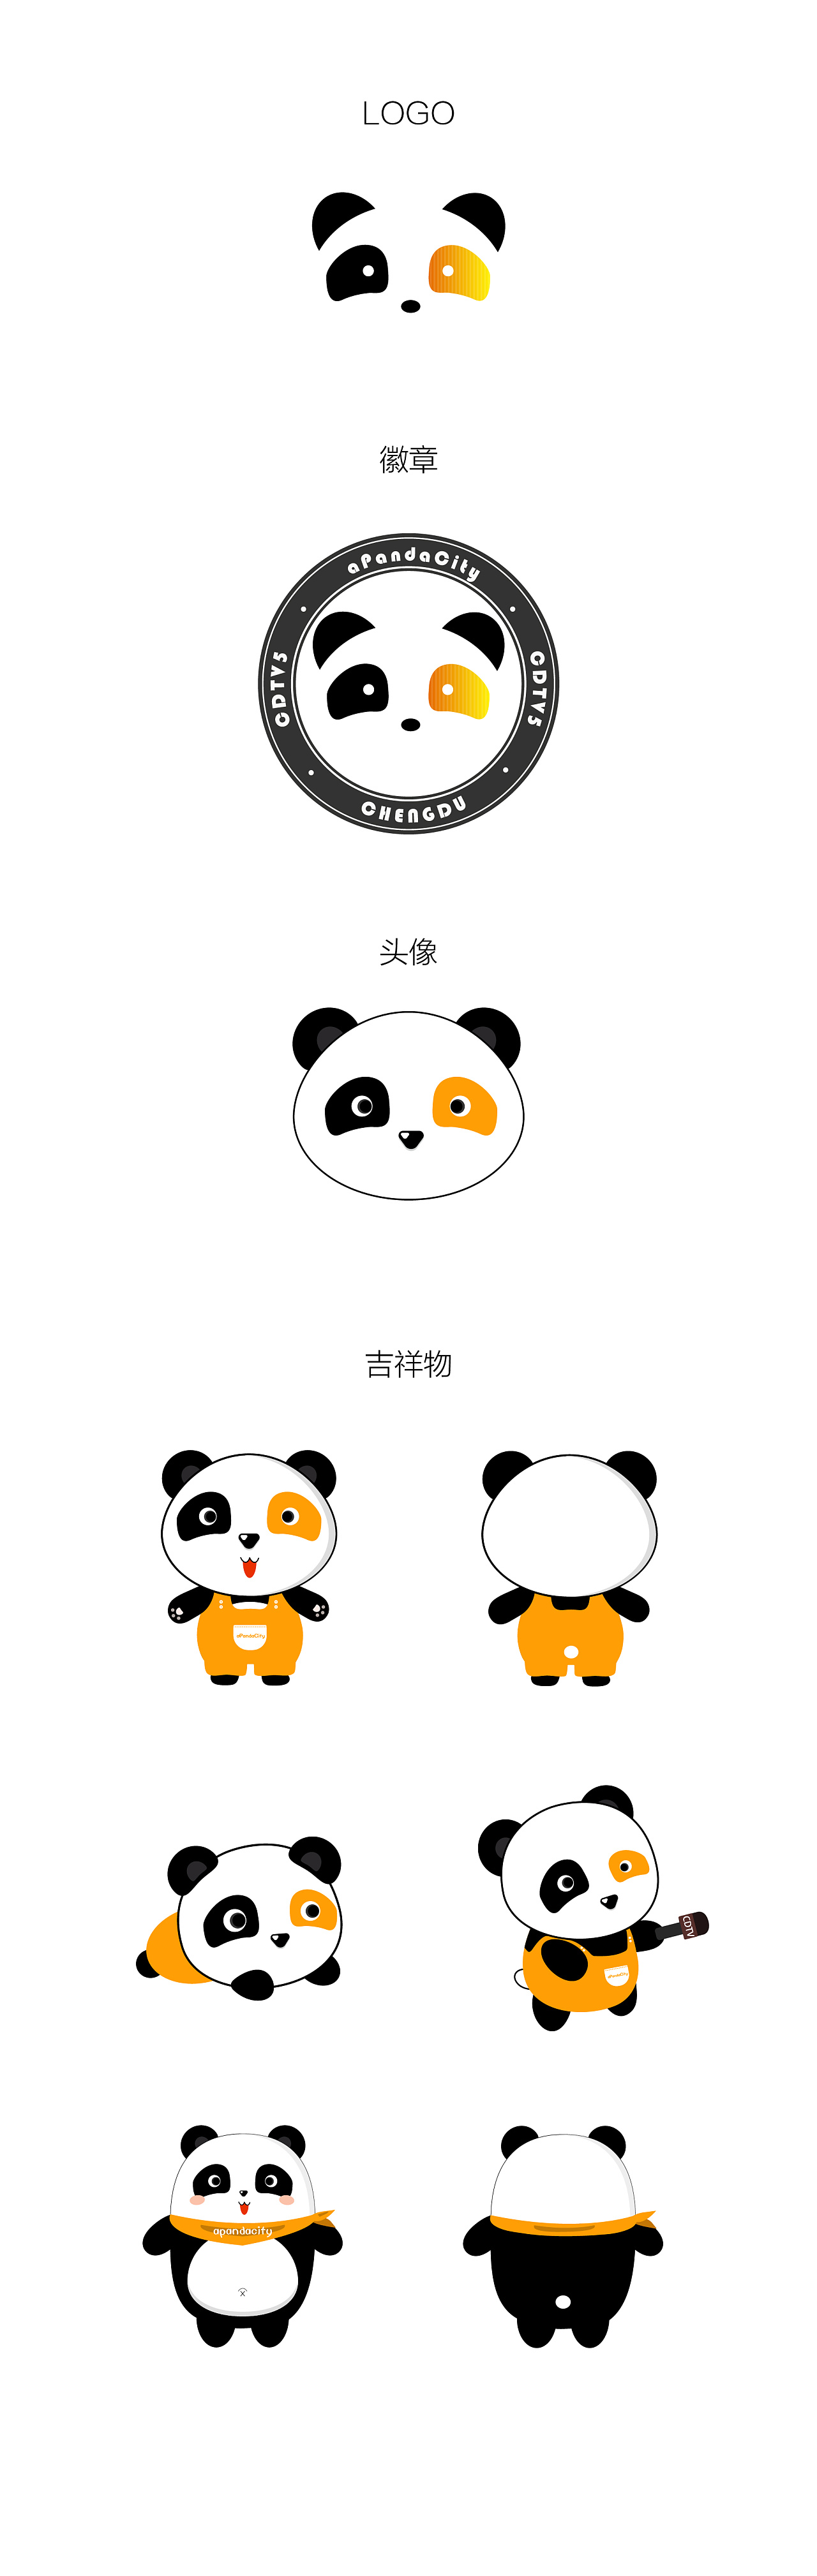 cdtv5旗下apandacity栏目组熊猫logo及吉祥物设计